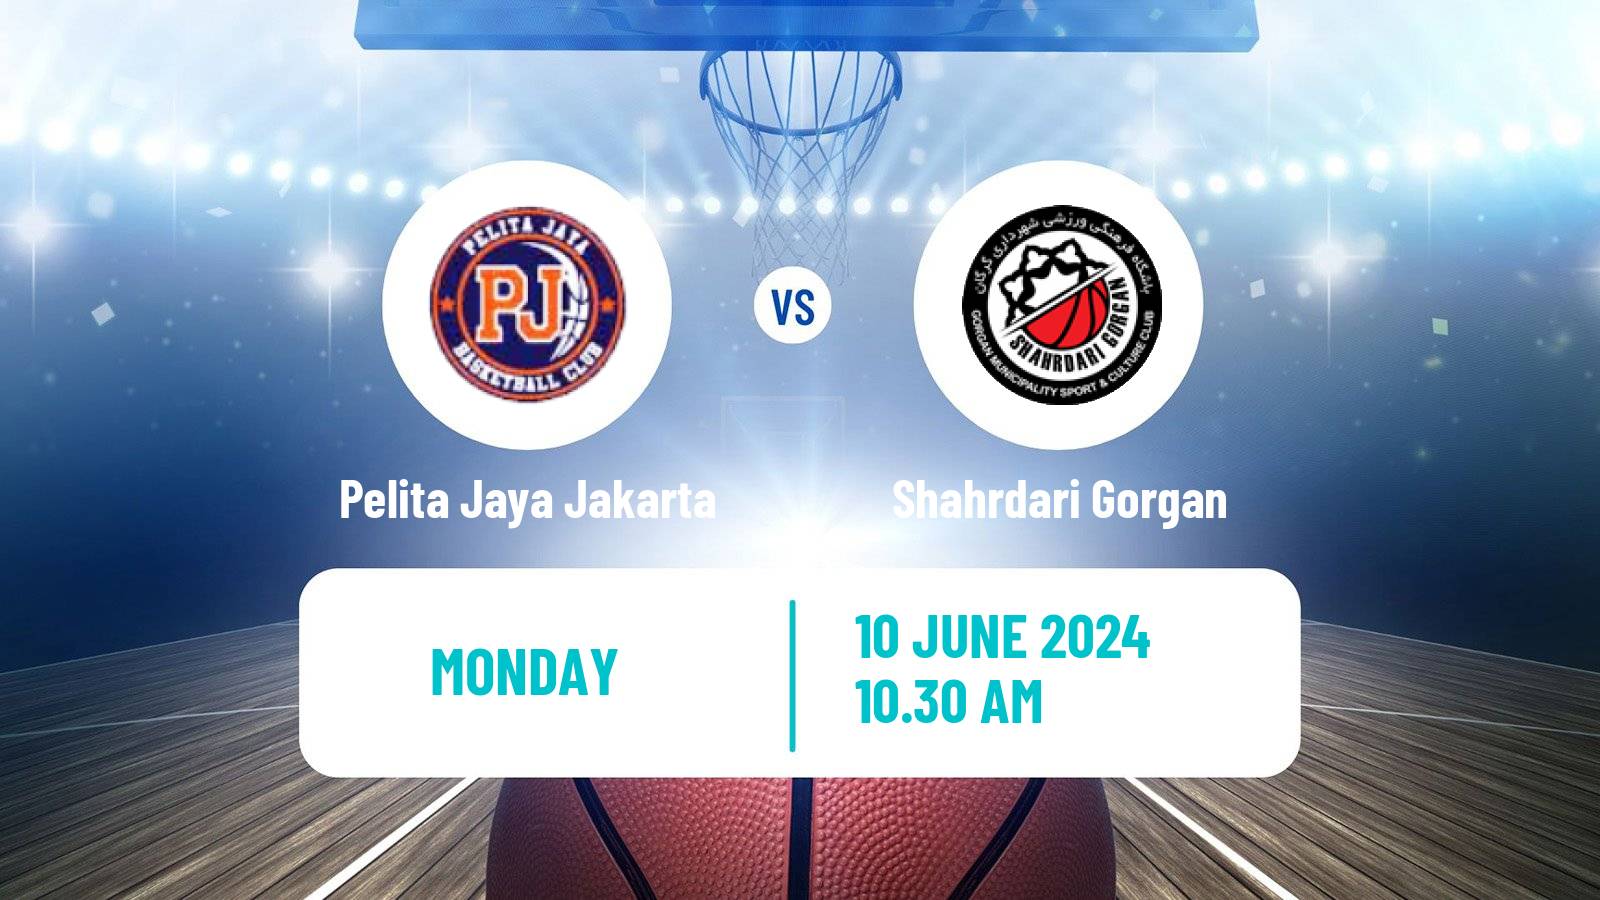 Basketball Asia Champions League Basketball Pelita Jaya Jakarta - Shahrdari Gorgan